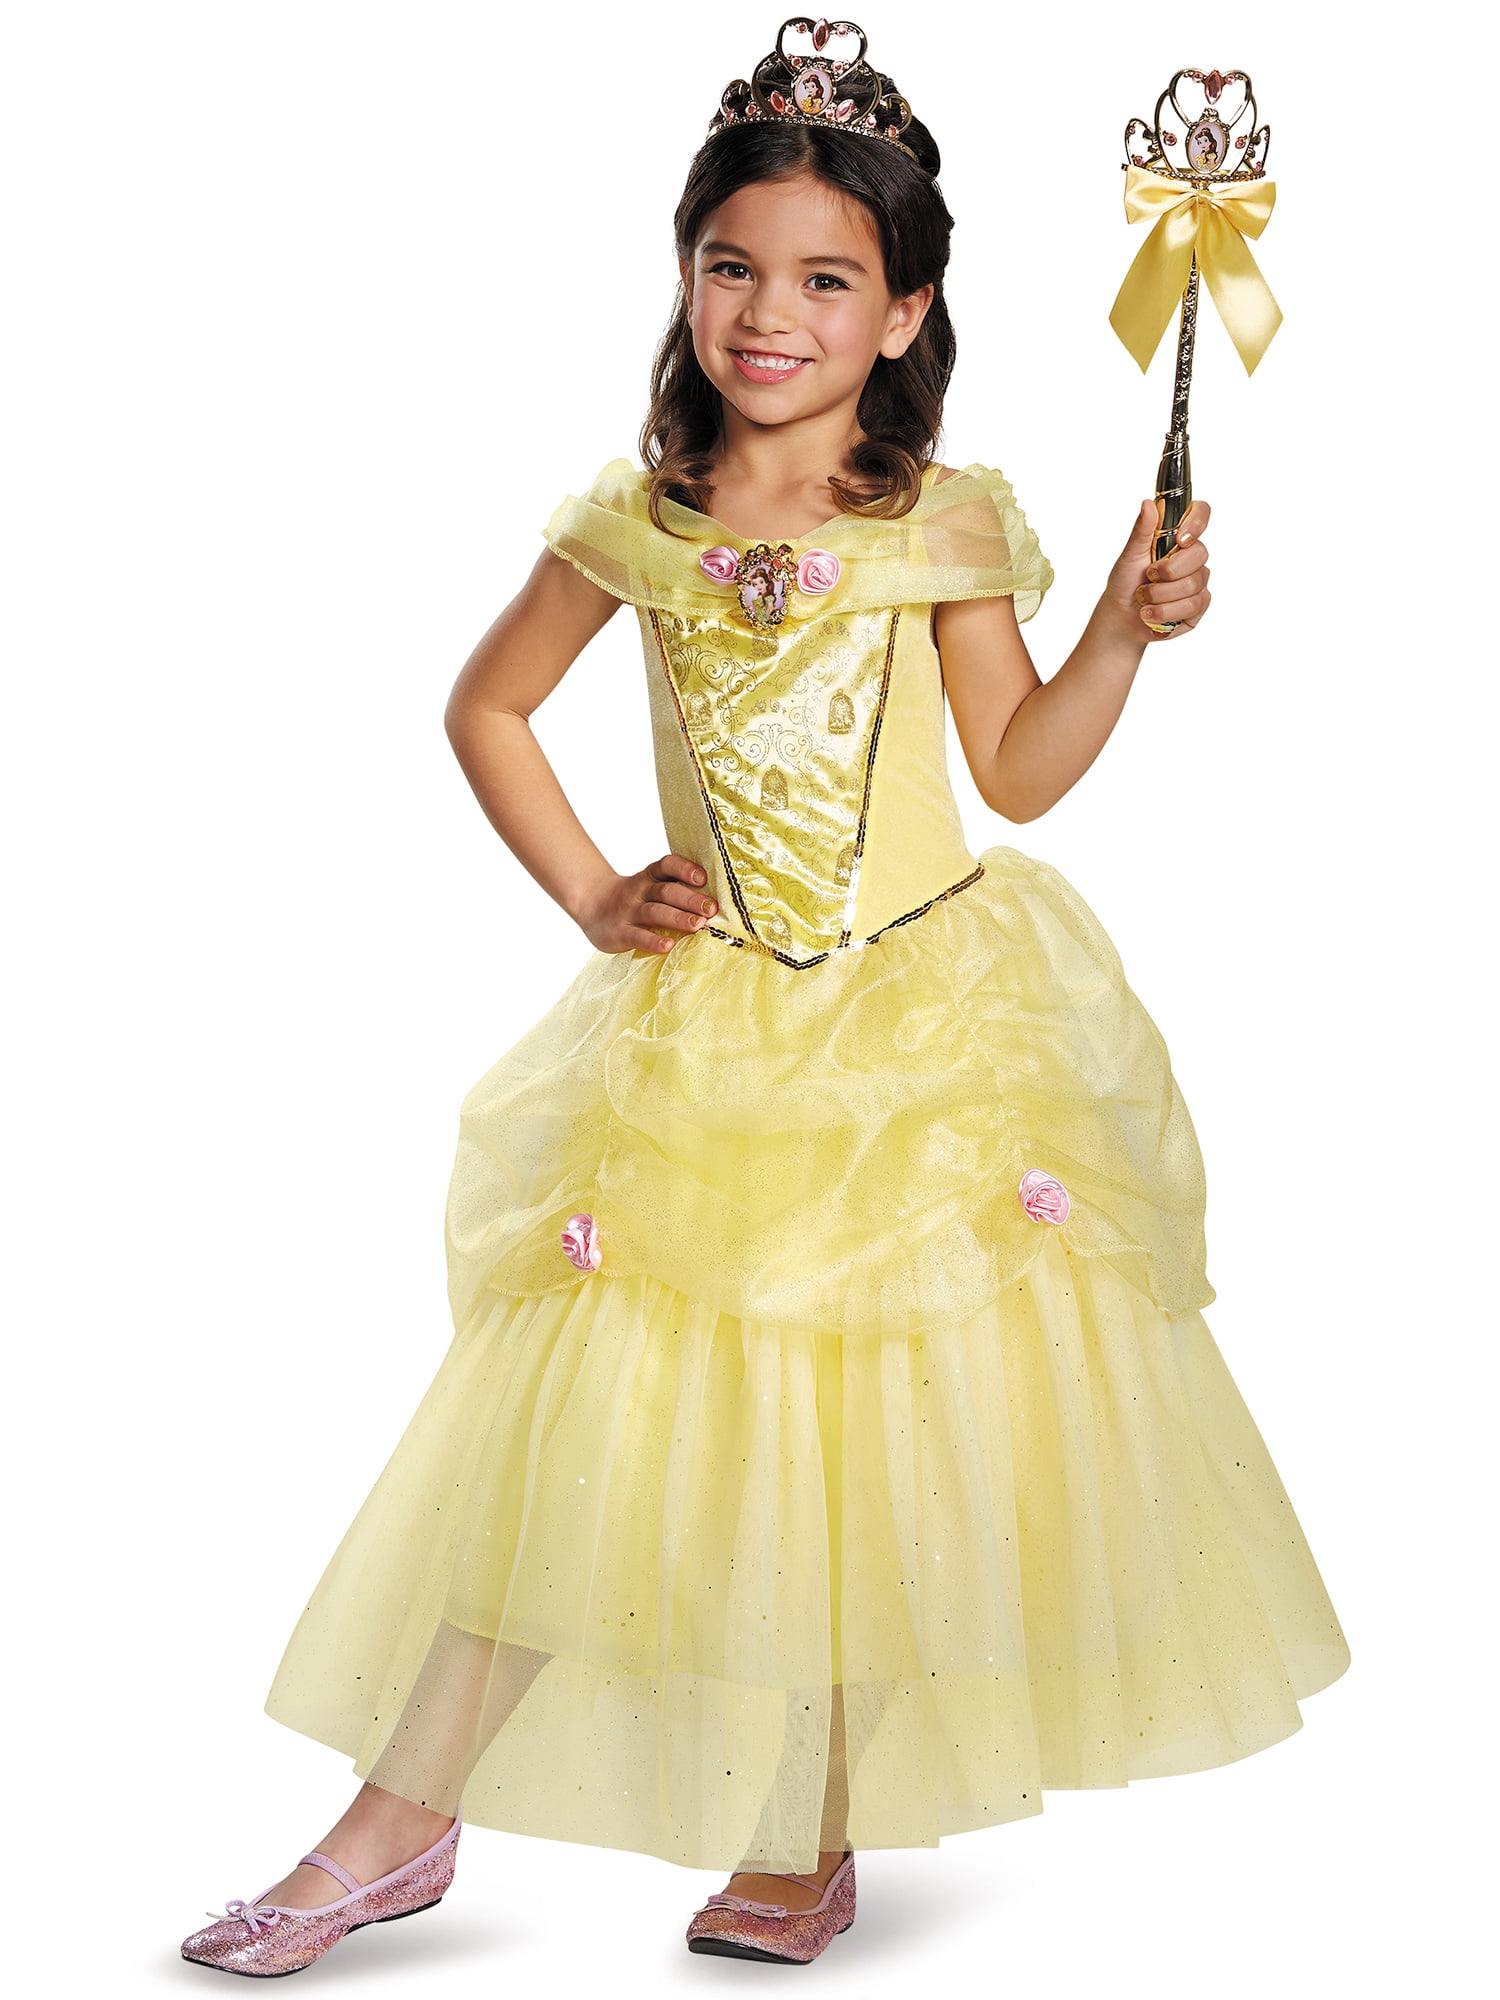 Disguise Costumes Belle Ultra Prestige Disney Princess Beauty and The Beast Costume Medium/7-8